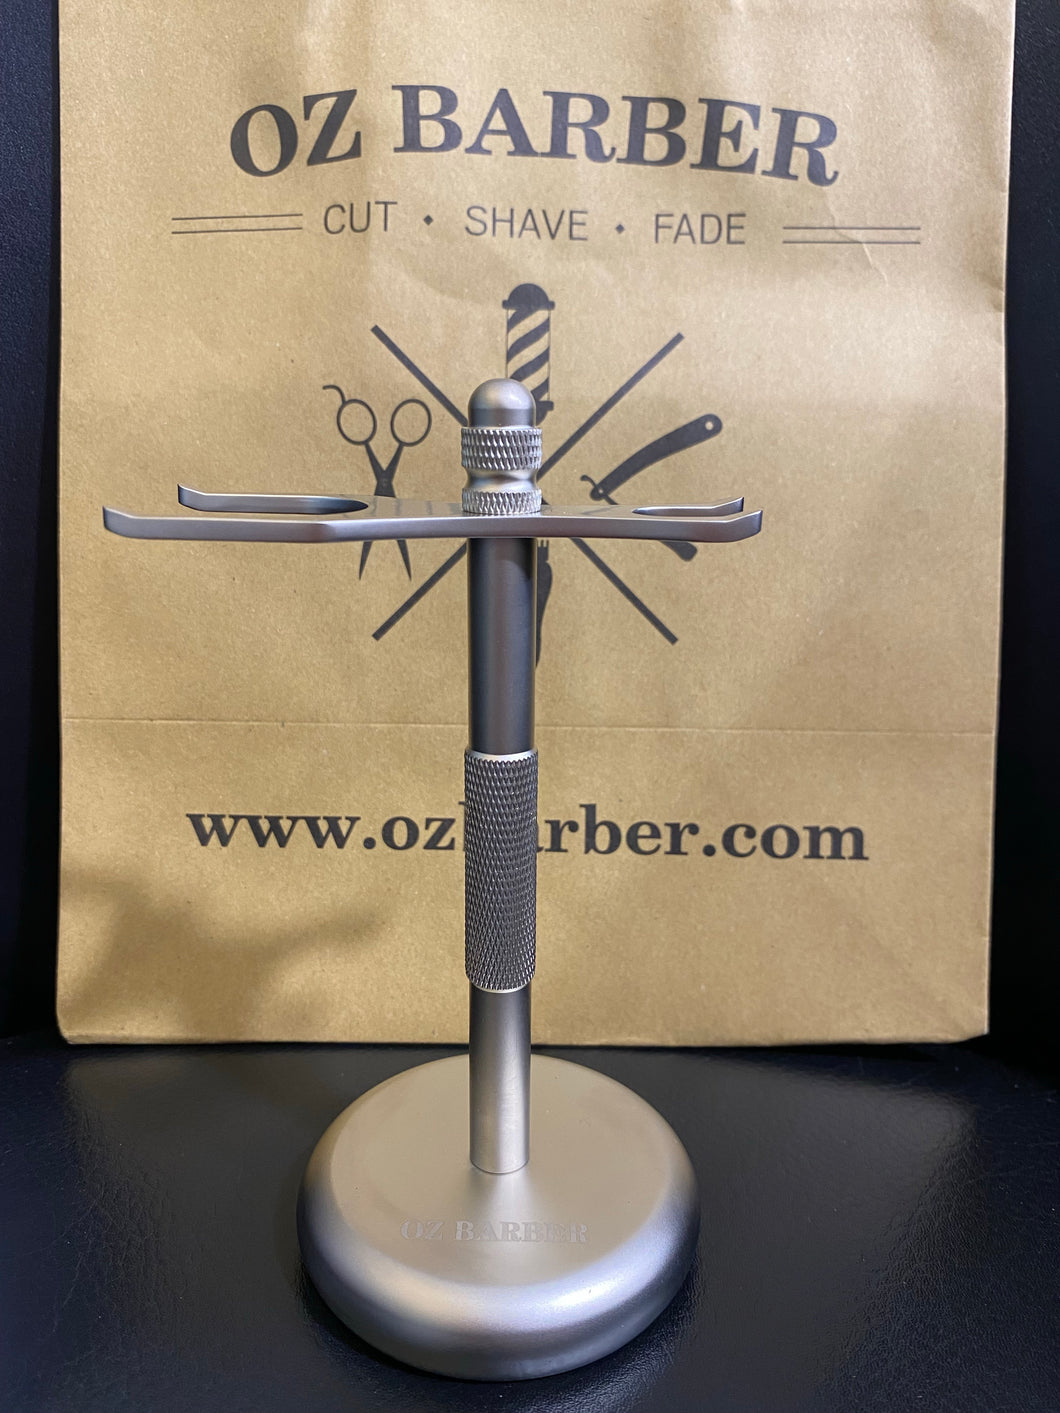 Oz Barber Zinc Alloy Shaving Brush and Razor Stand SM18